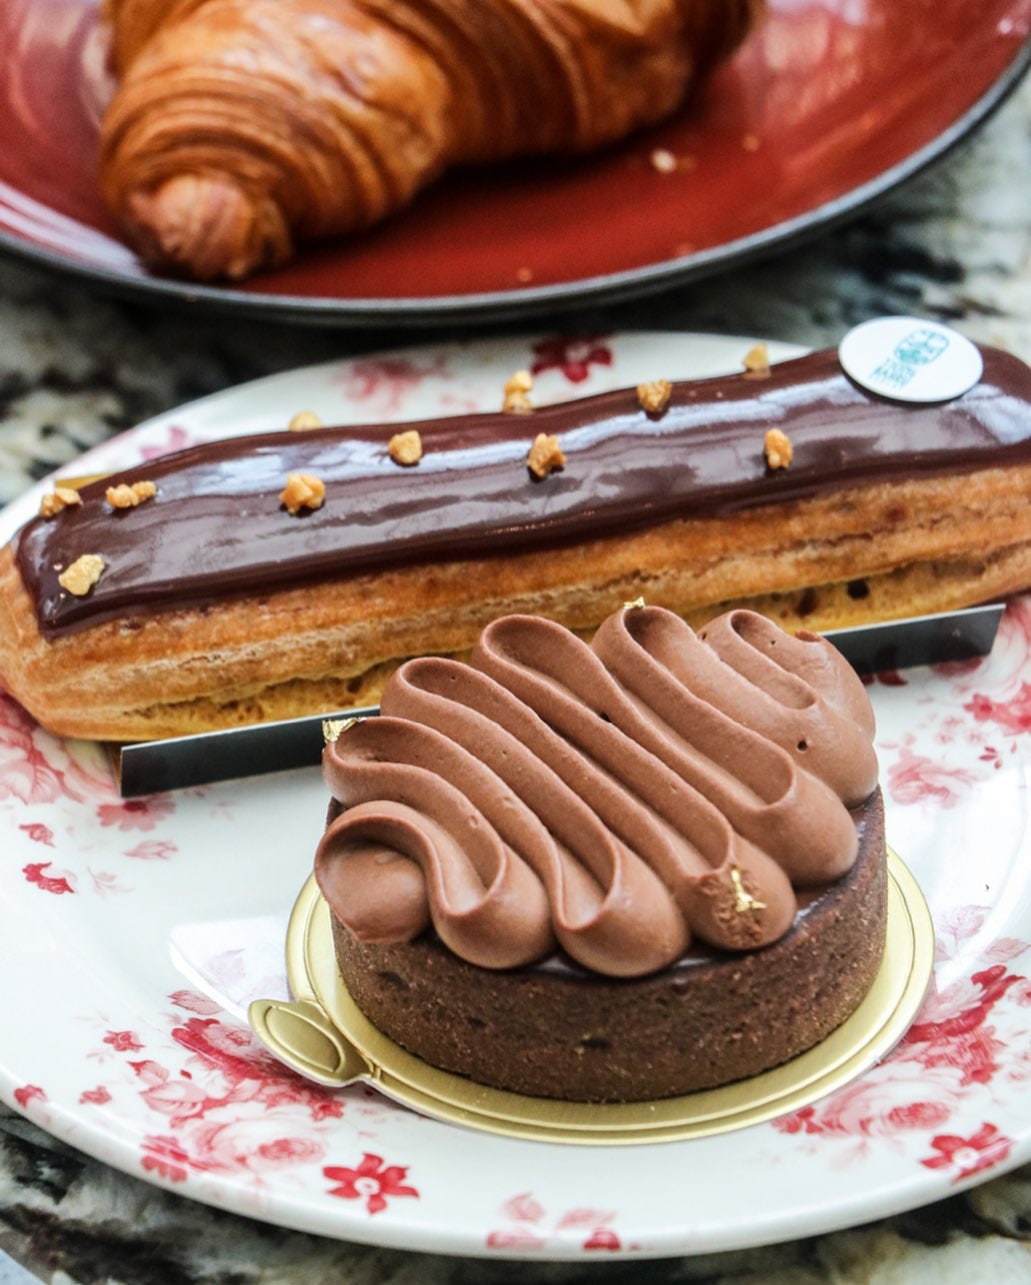 tiong bahru bakery - chocolate tart